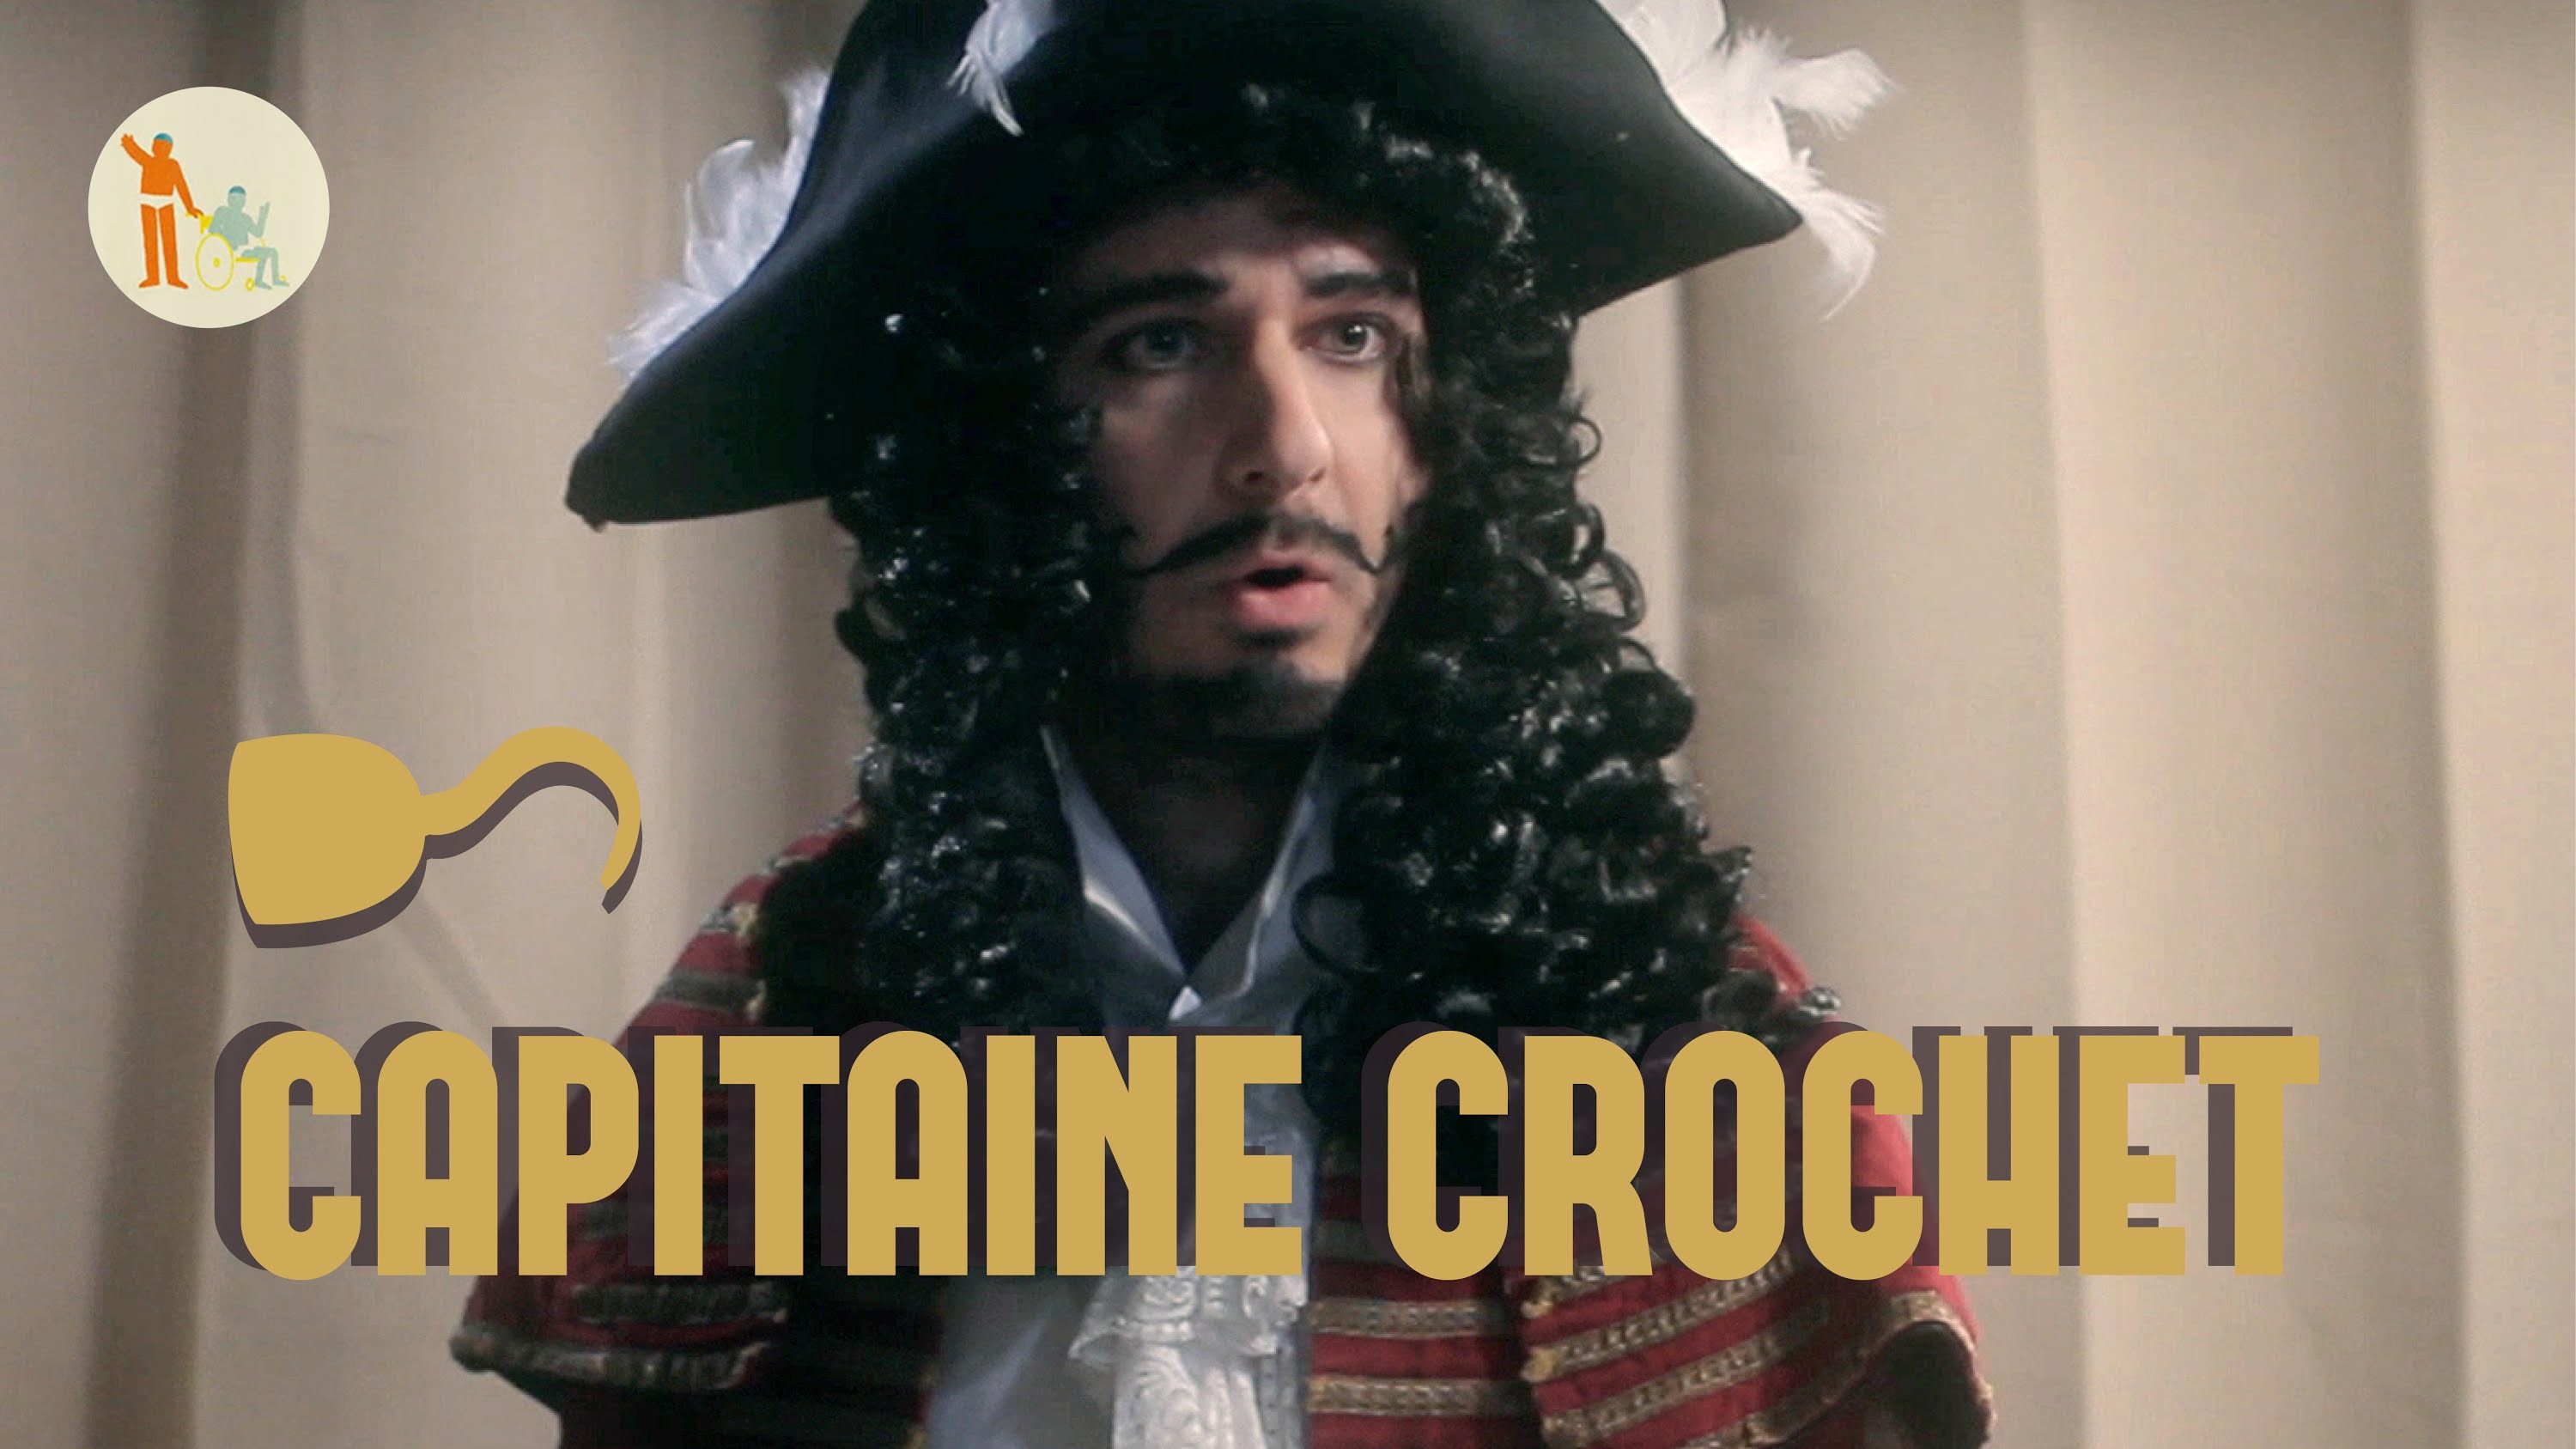 Vestiaires Libérés #2 : Capitaine Crochet (feat. Romain Lancry)